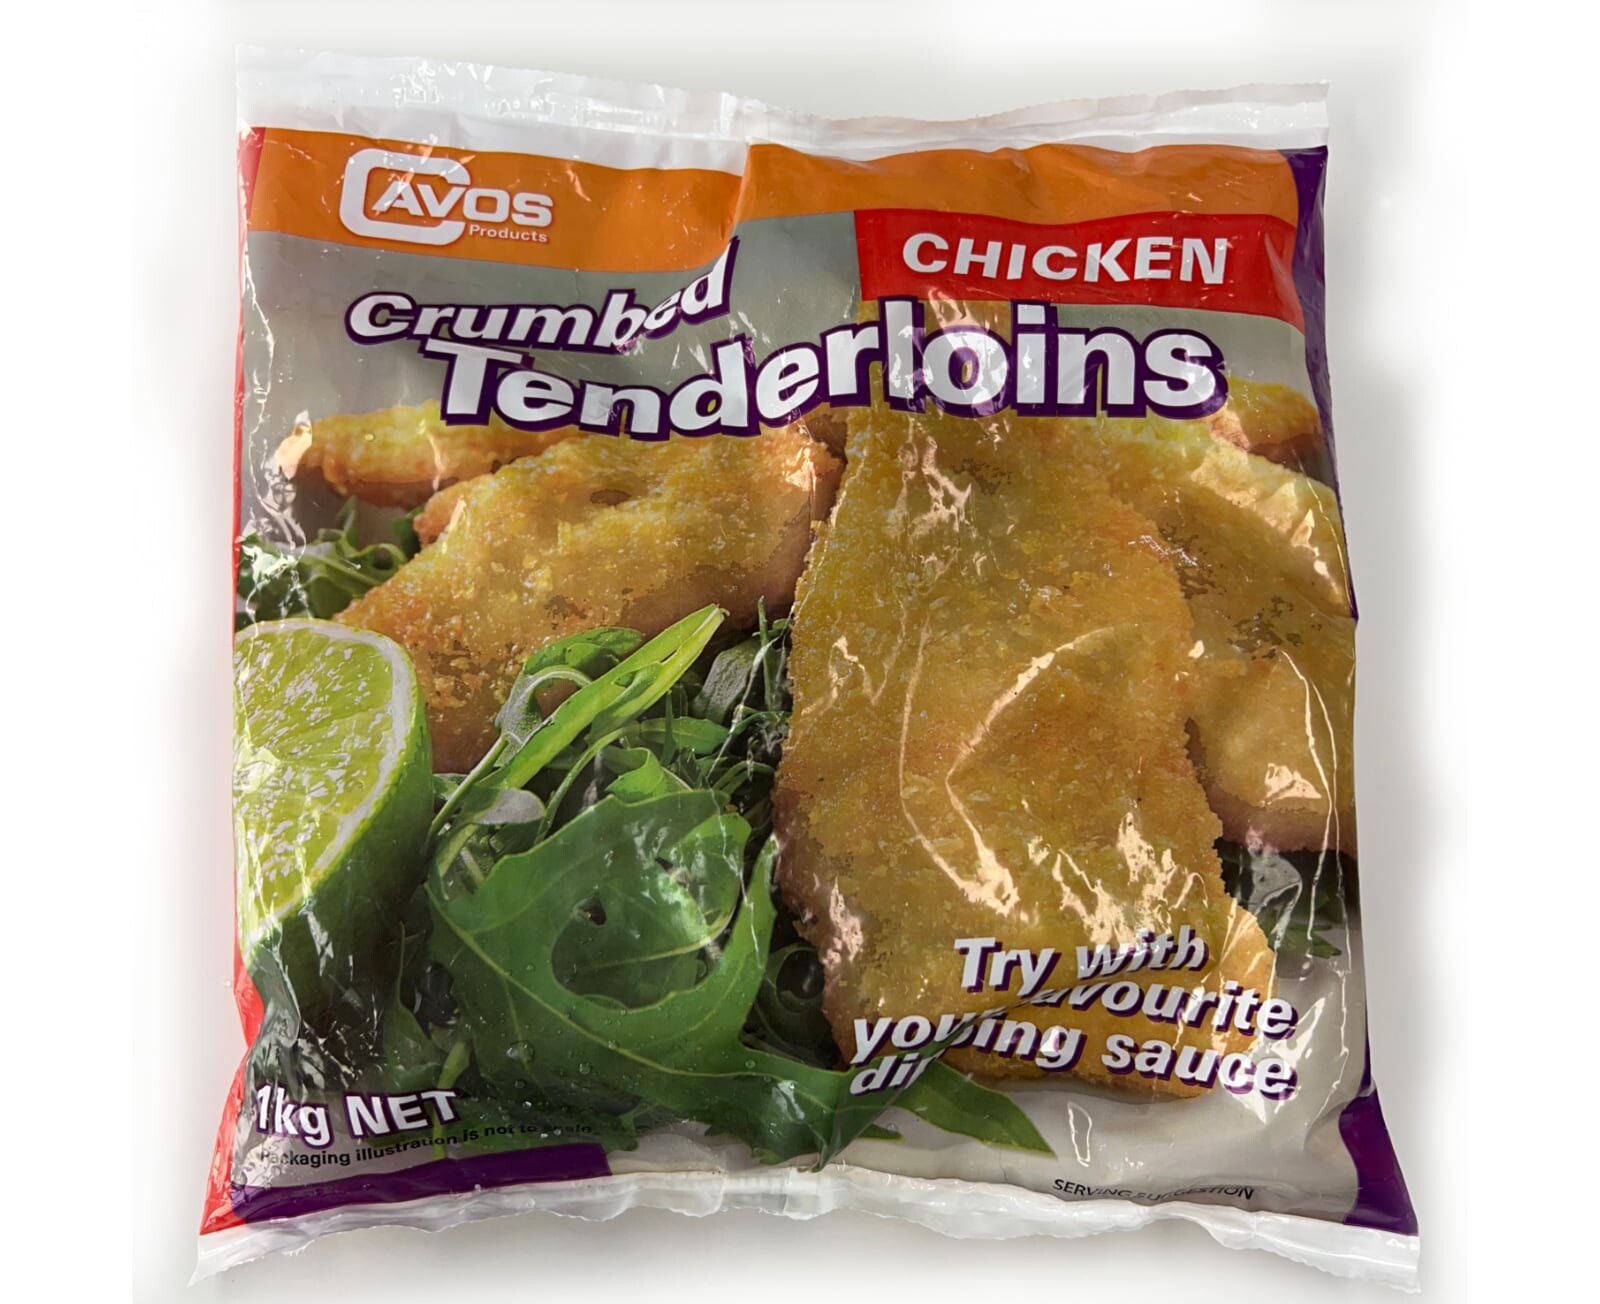 Cavos Products Crumbed Chicken Tenderloins